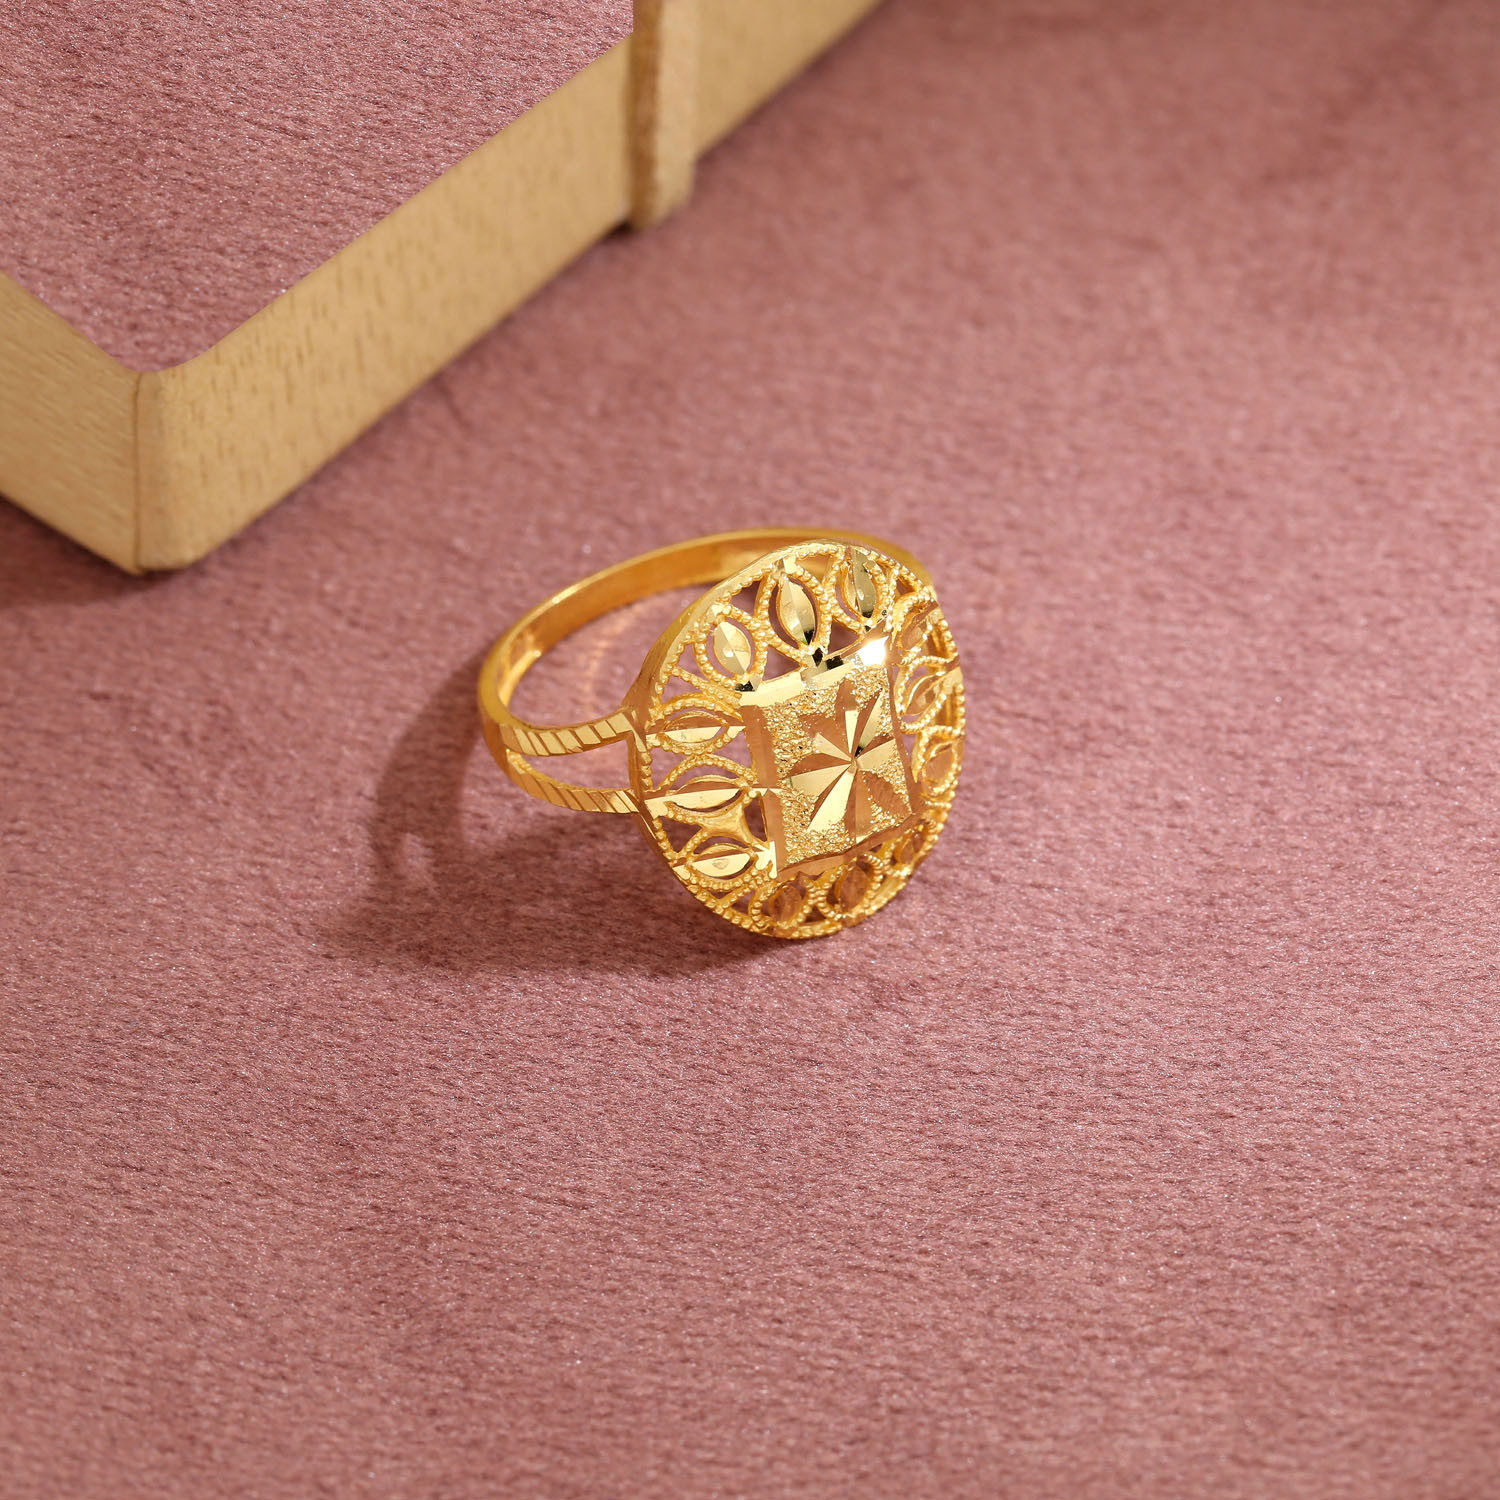 Malabar Gold & Diamonds 22KT Yellow Gold Ring for Women : Amazon.in:  Jewellery